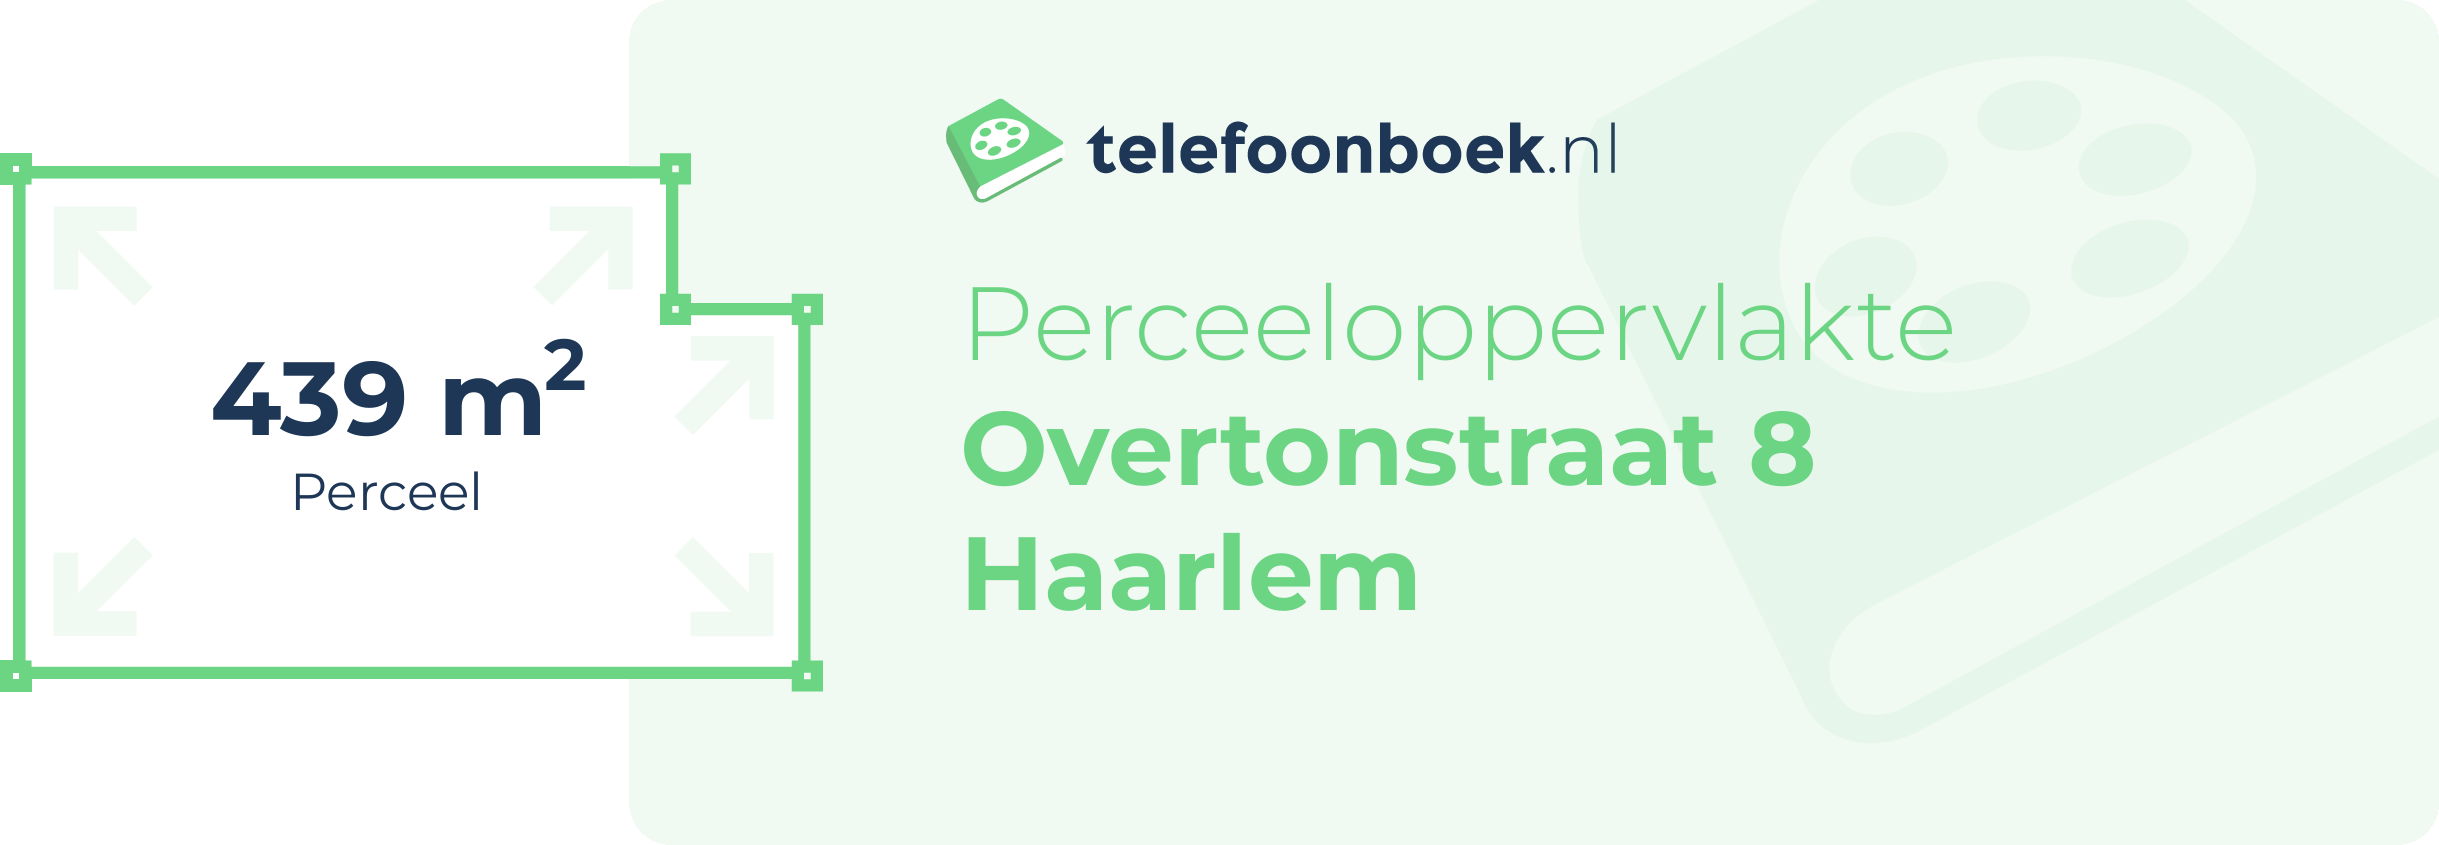 Perceeloppervlakte Overtonstraat 8 Haarlem